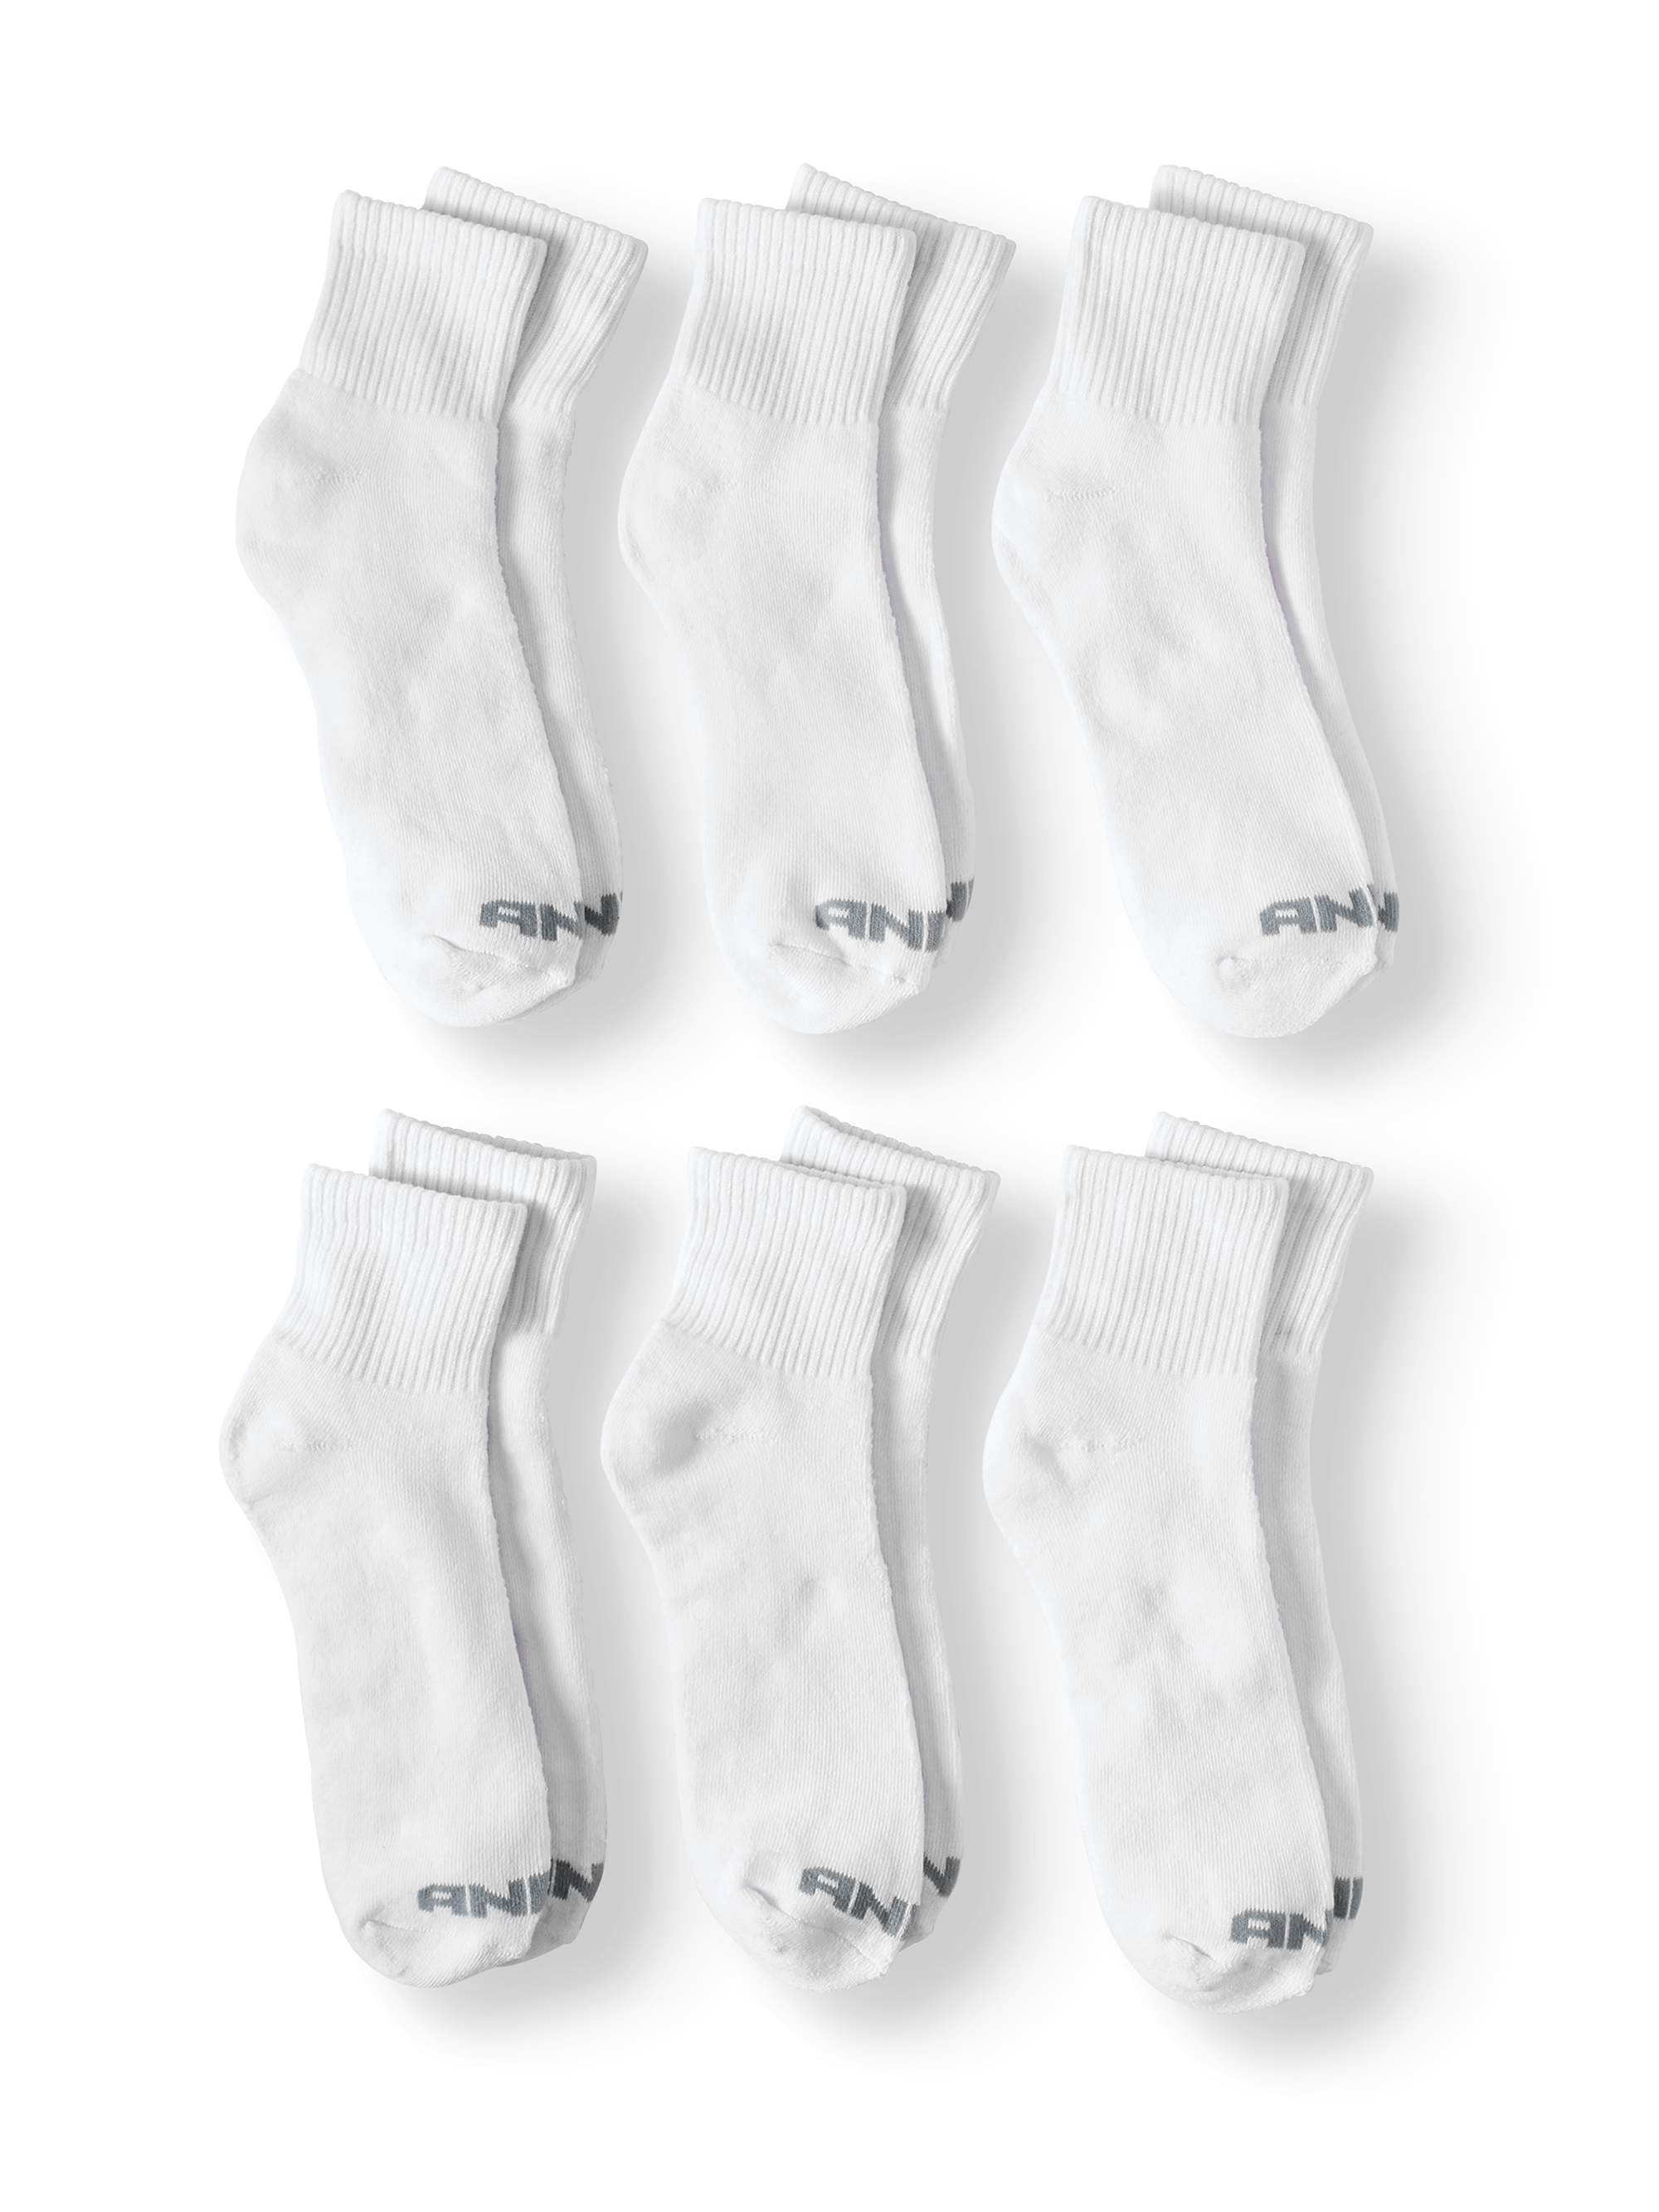 Men‘s Full Cushion Quarter Cut Socks, 6 Pack - Walmart.com